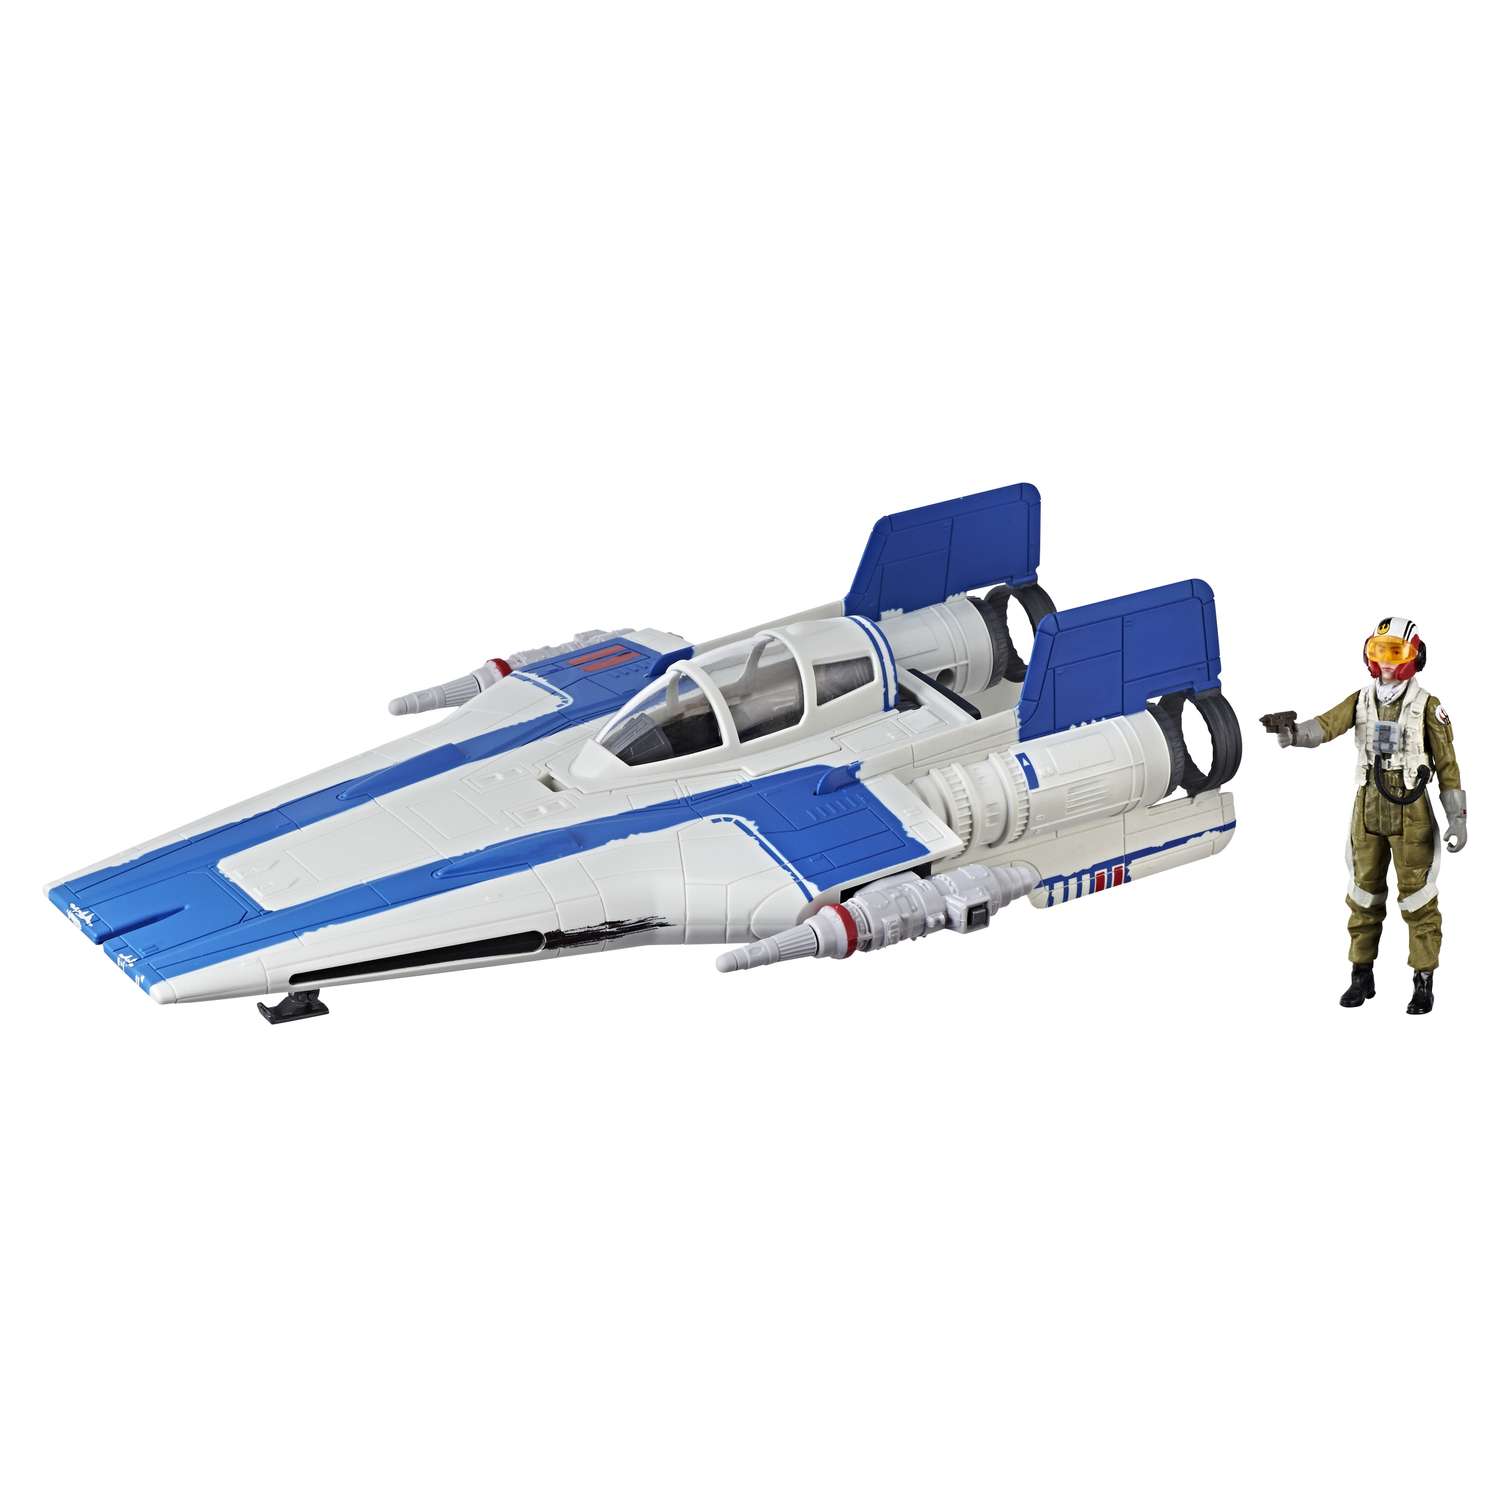 Игрушка Star Wars (SW) Транспорт Звездный истребитель a wing E1264EU4 E0326EU4 - фото 1